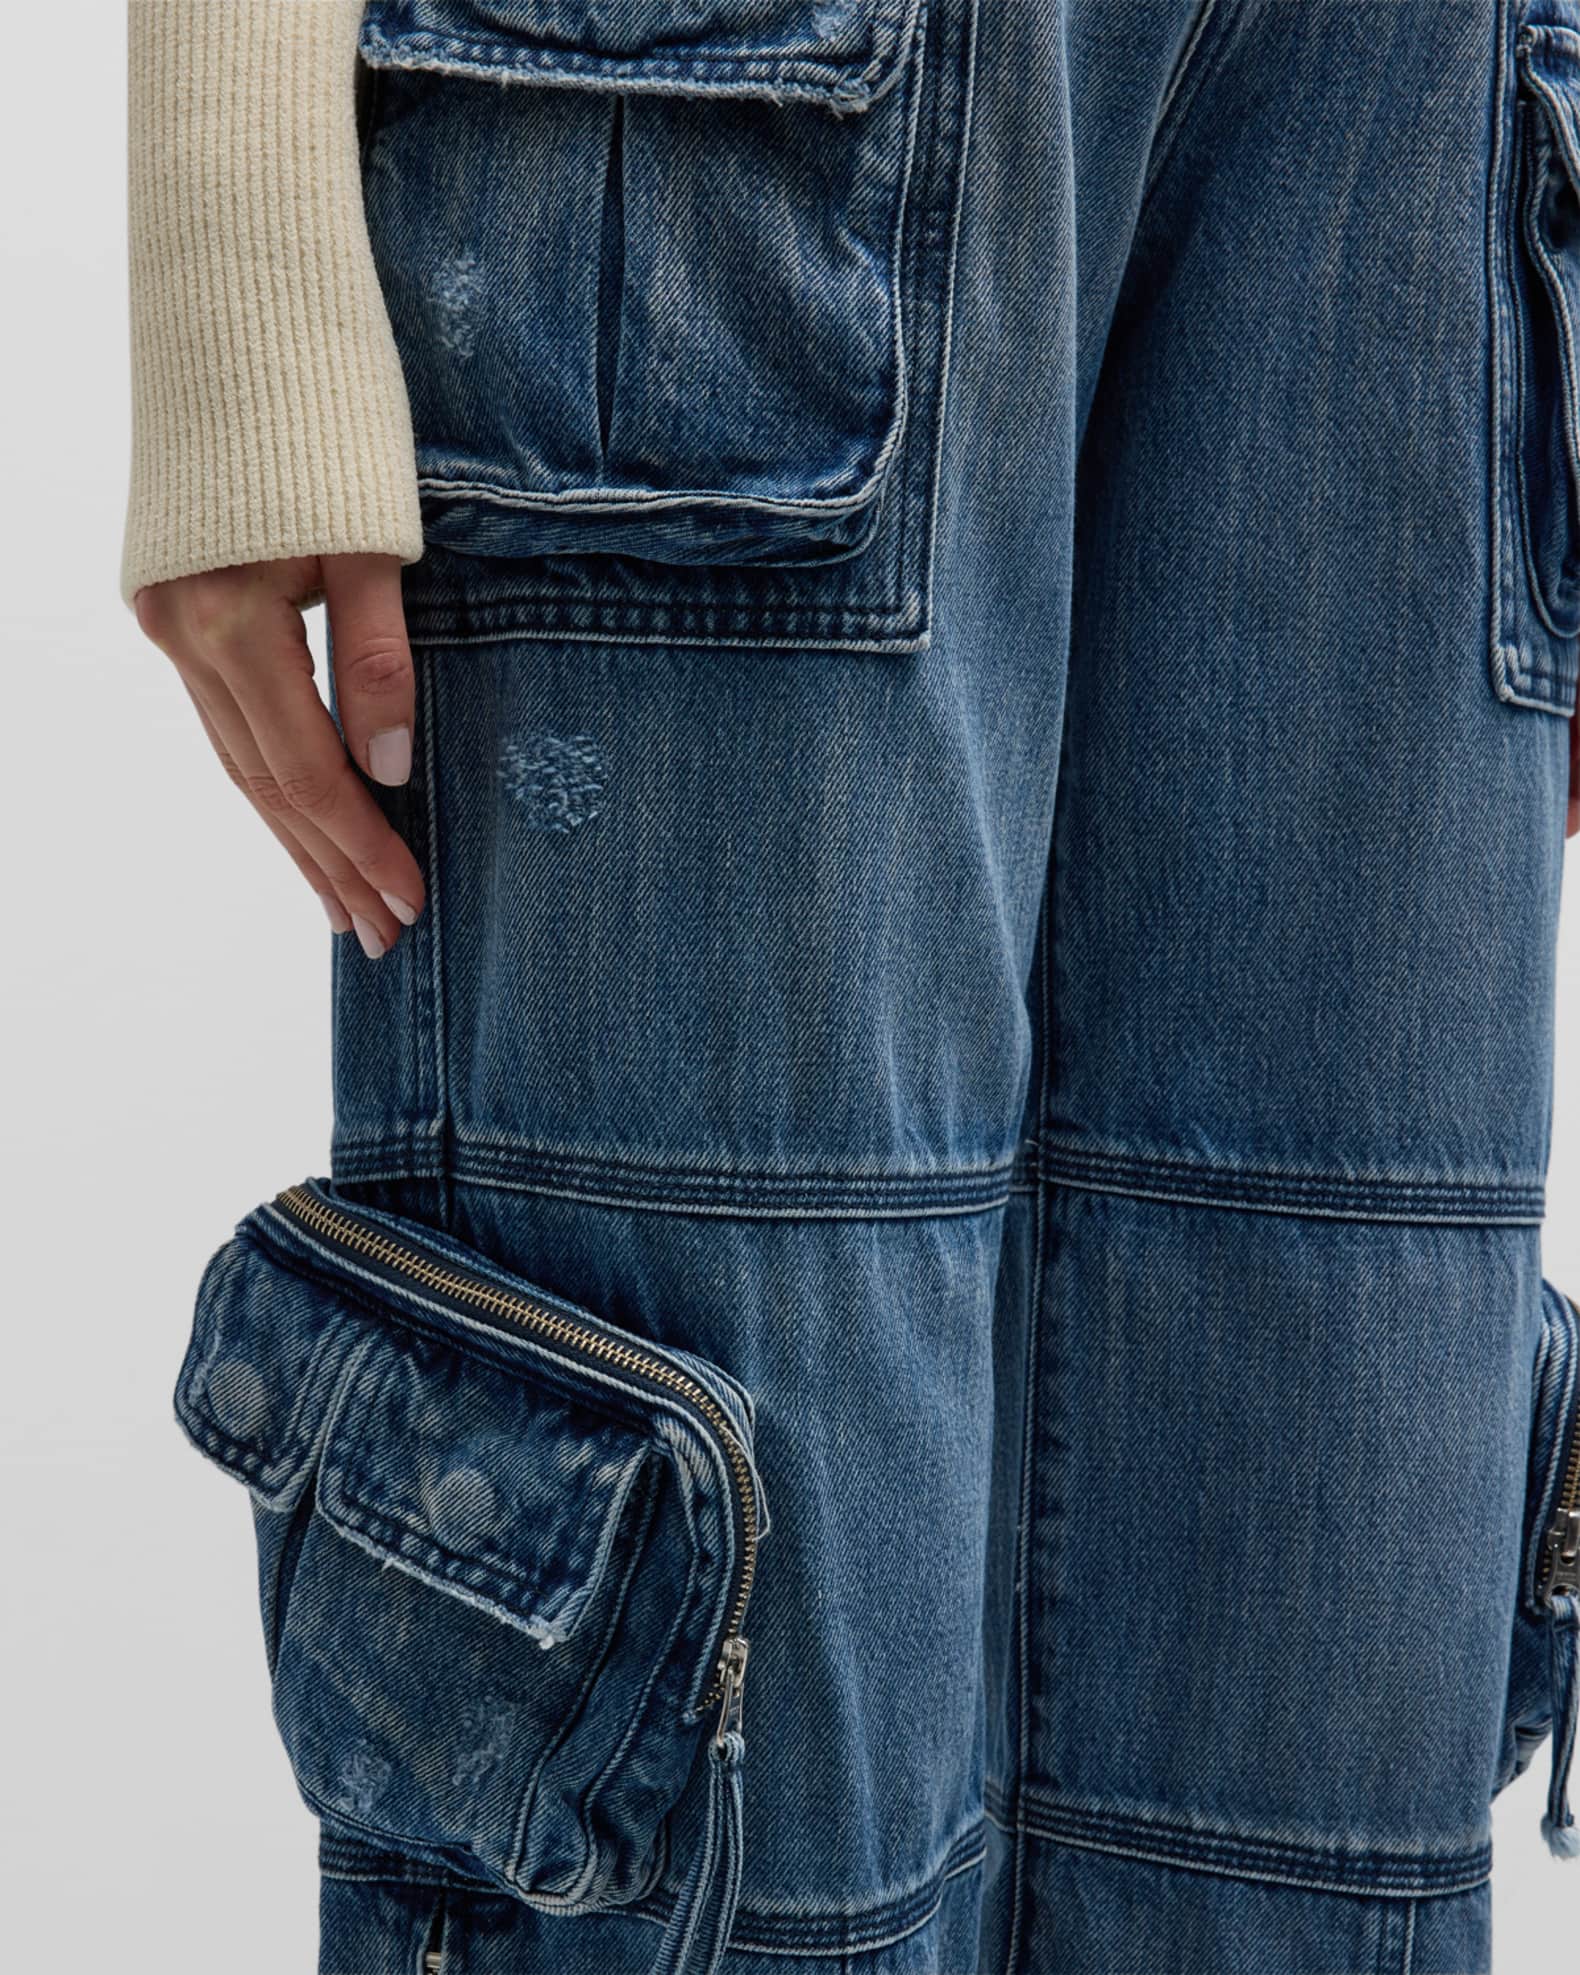 Retrofete Tammy Low-Rise Zip-Cuff Cargo Denim Jeans